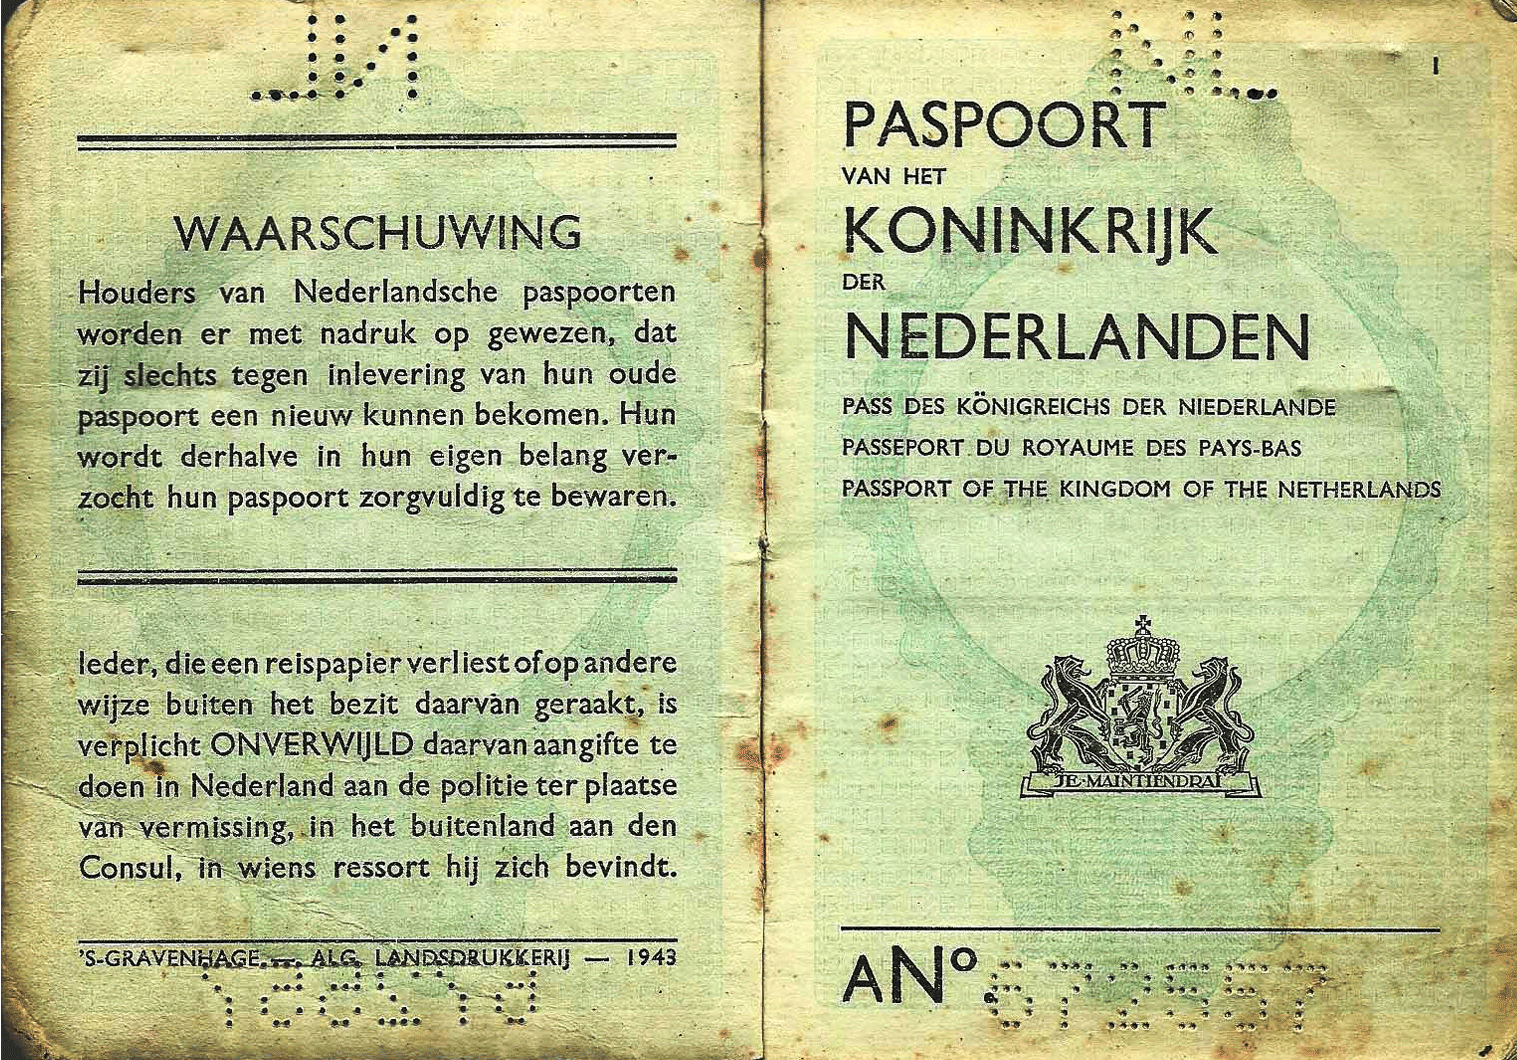 WW2 Dutch service passport